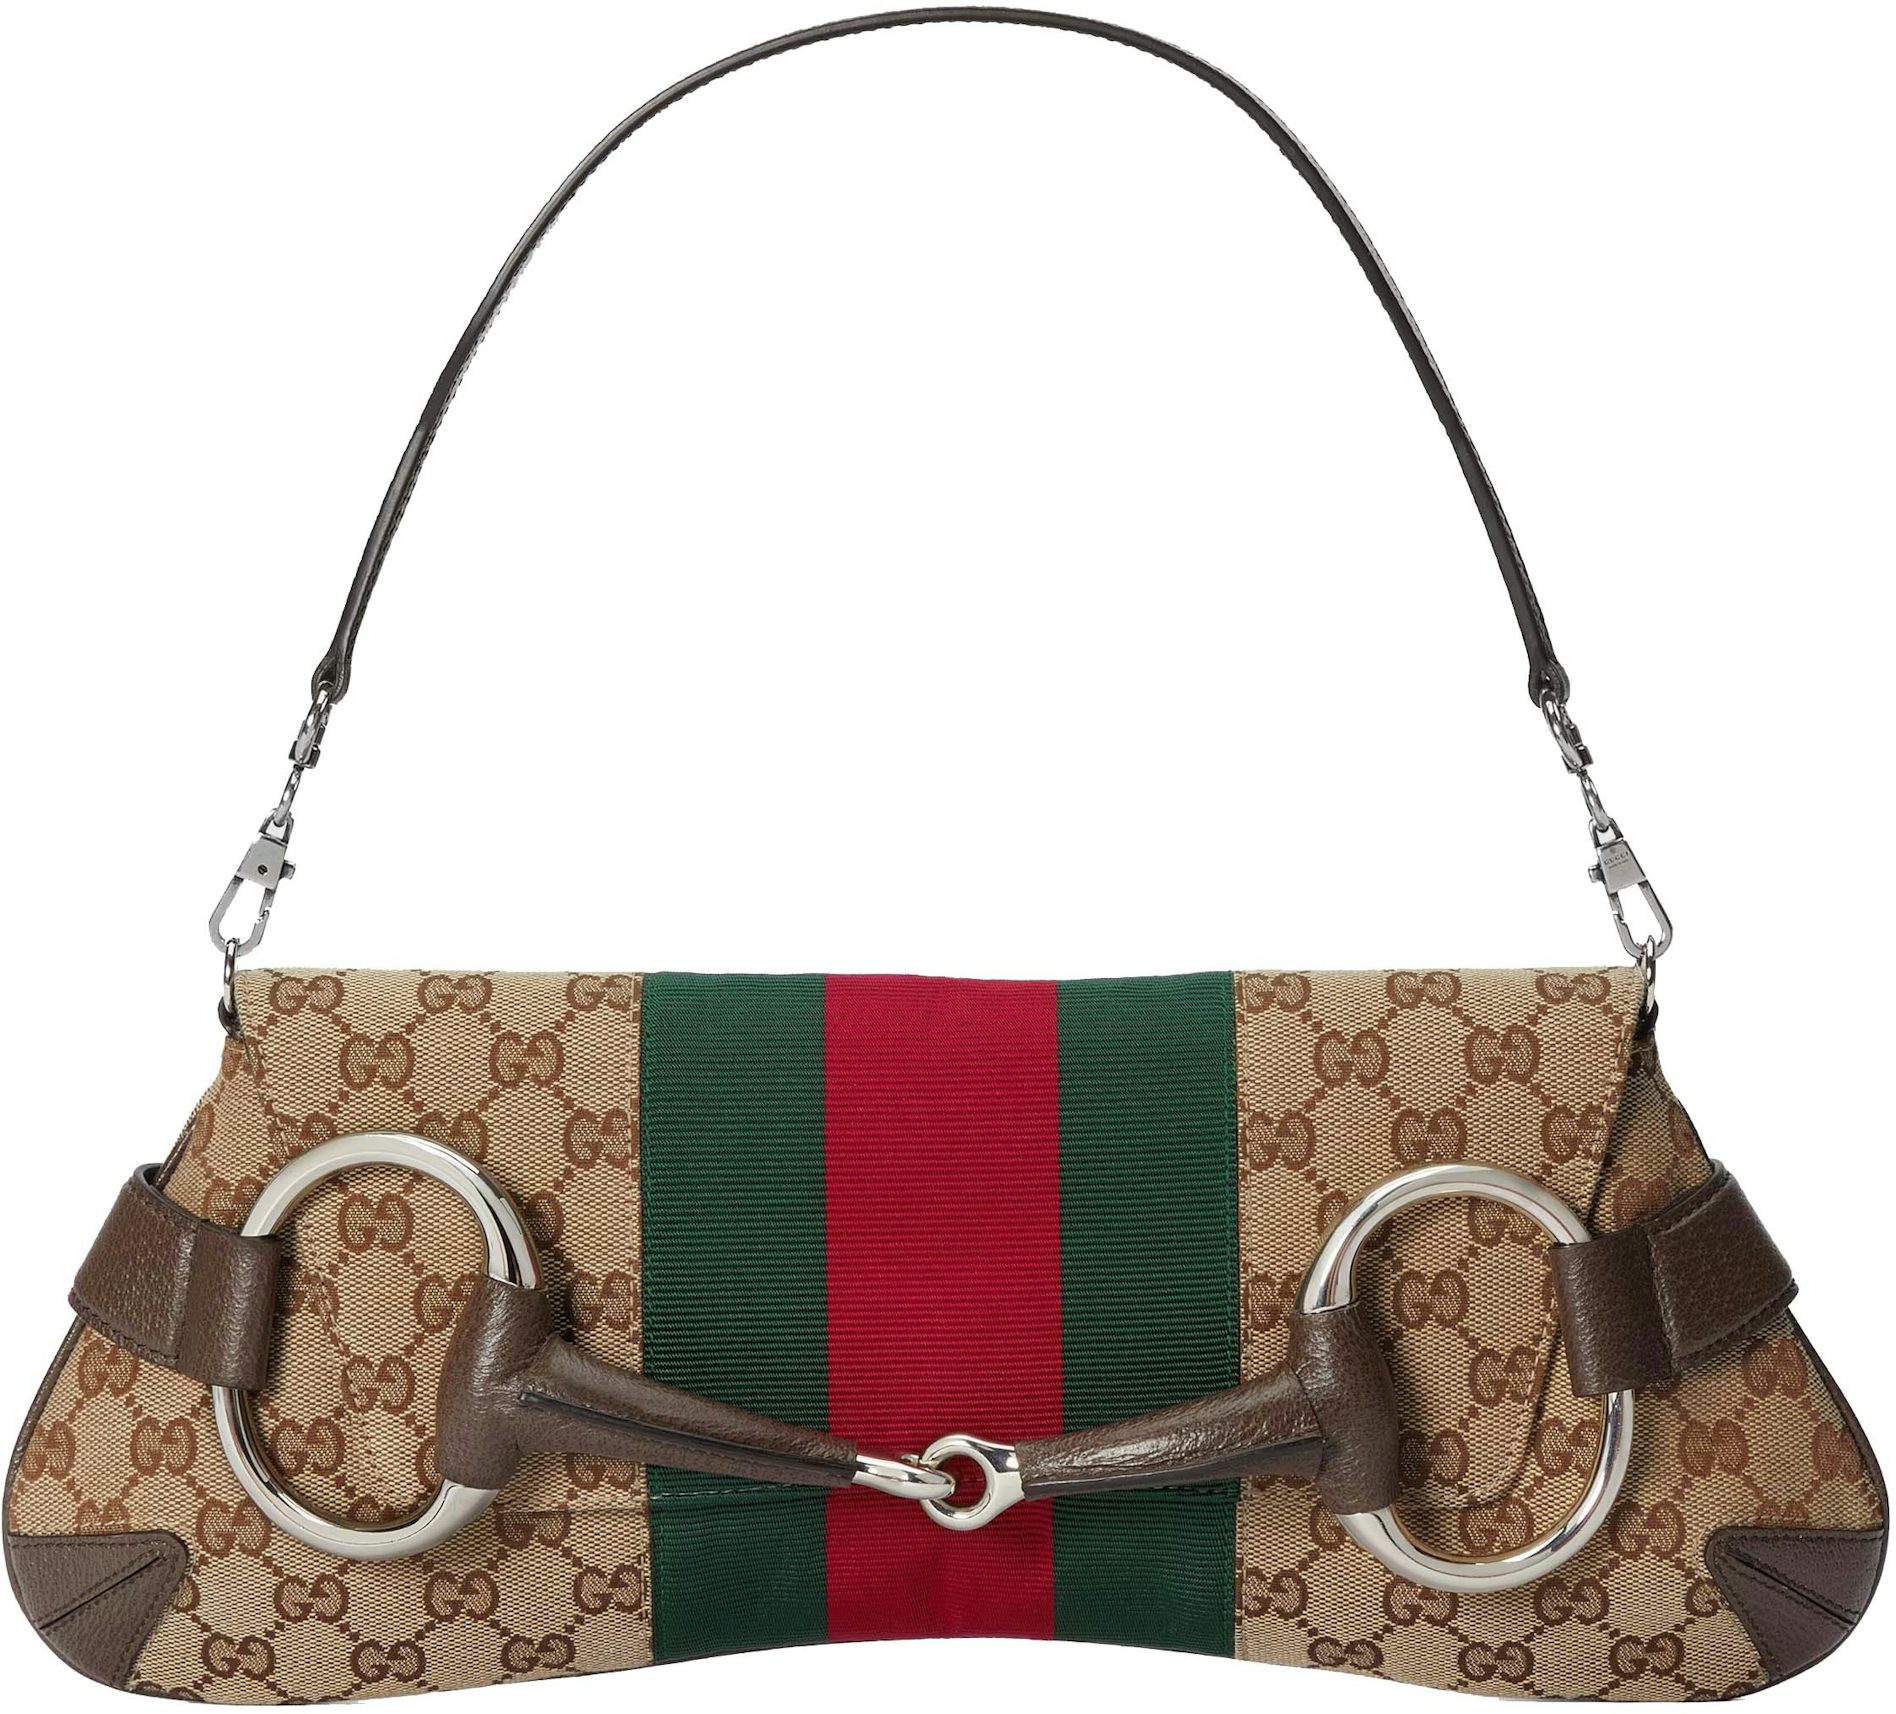 Gucci Horsebit Chain medium shoulder bag in green leather